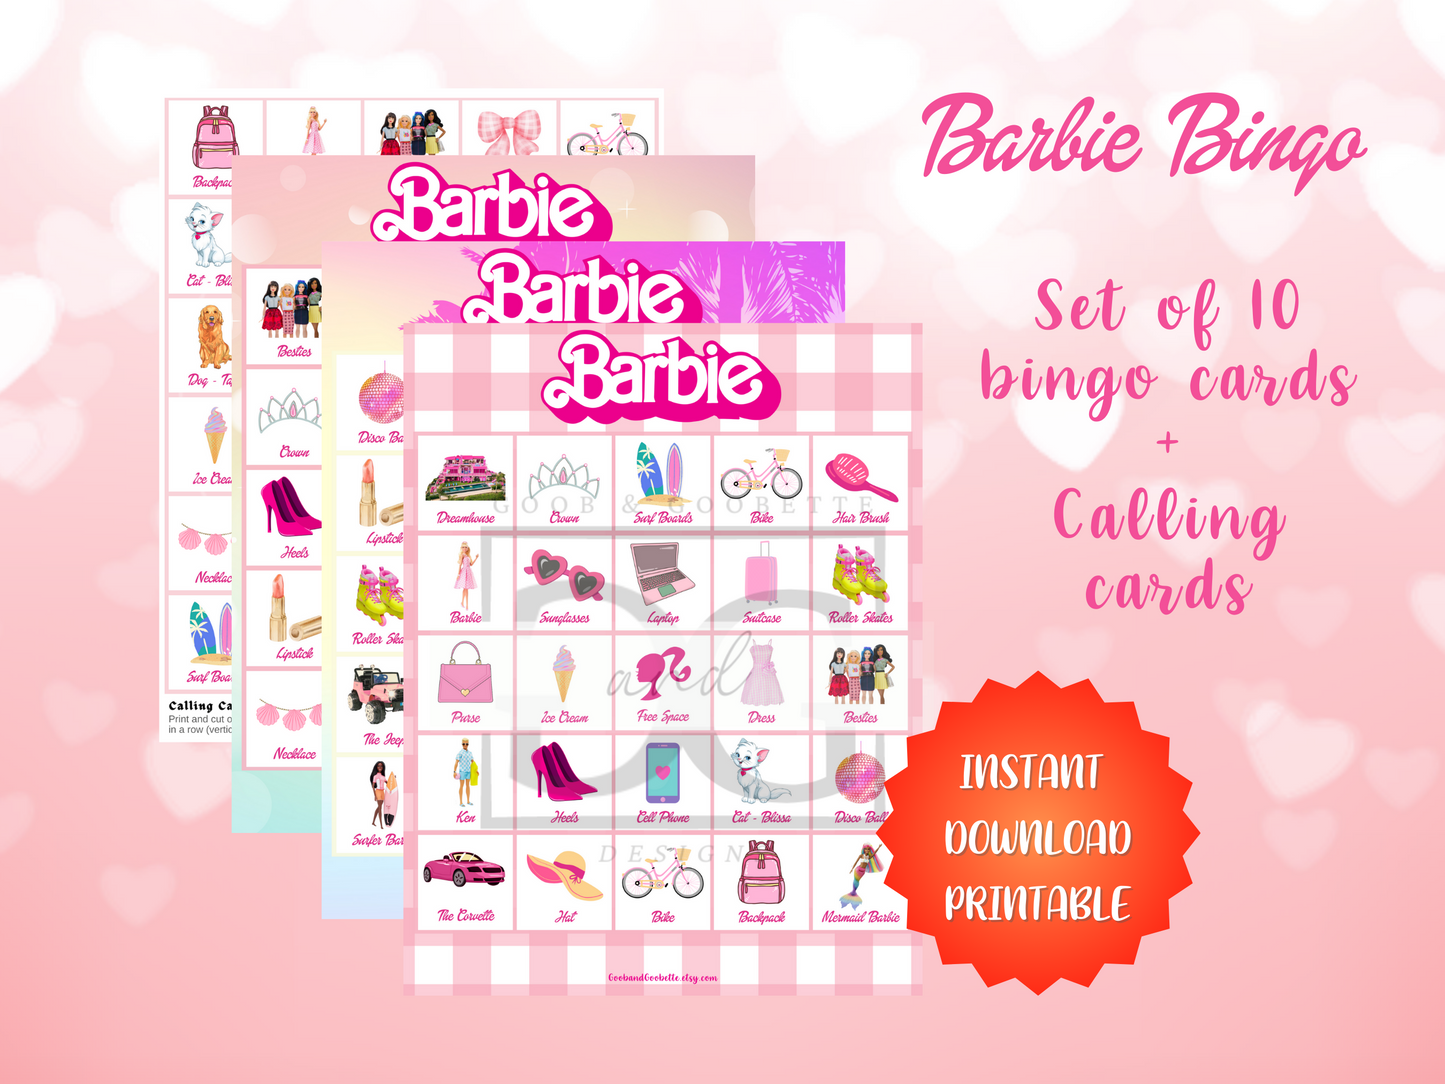 Barbie Bingo Game (10 Players)